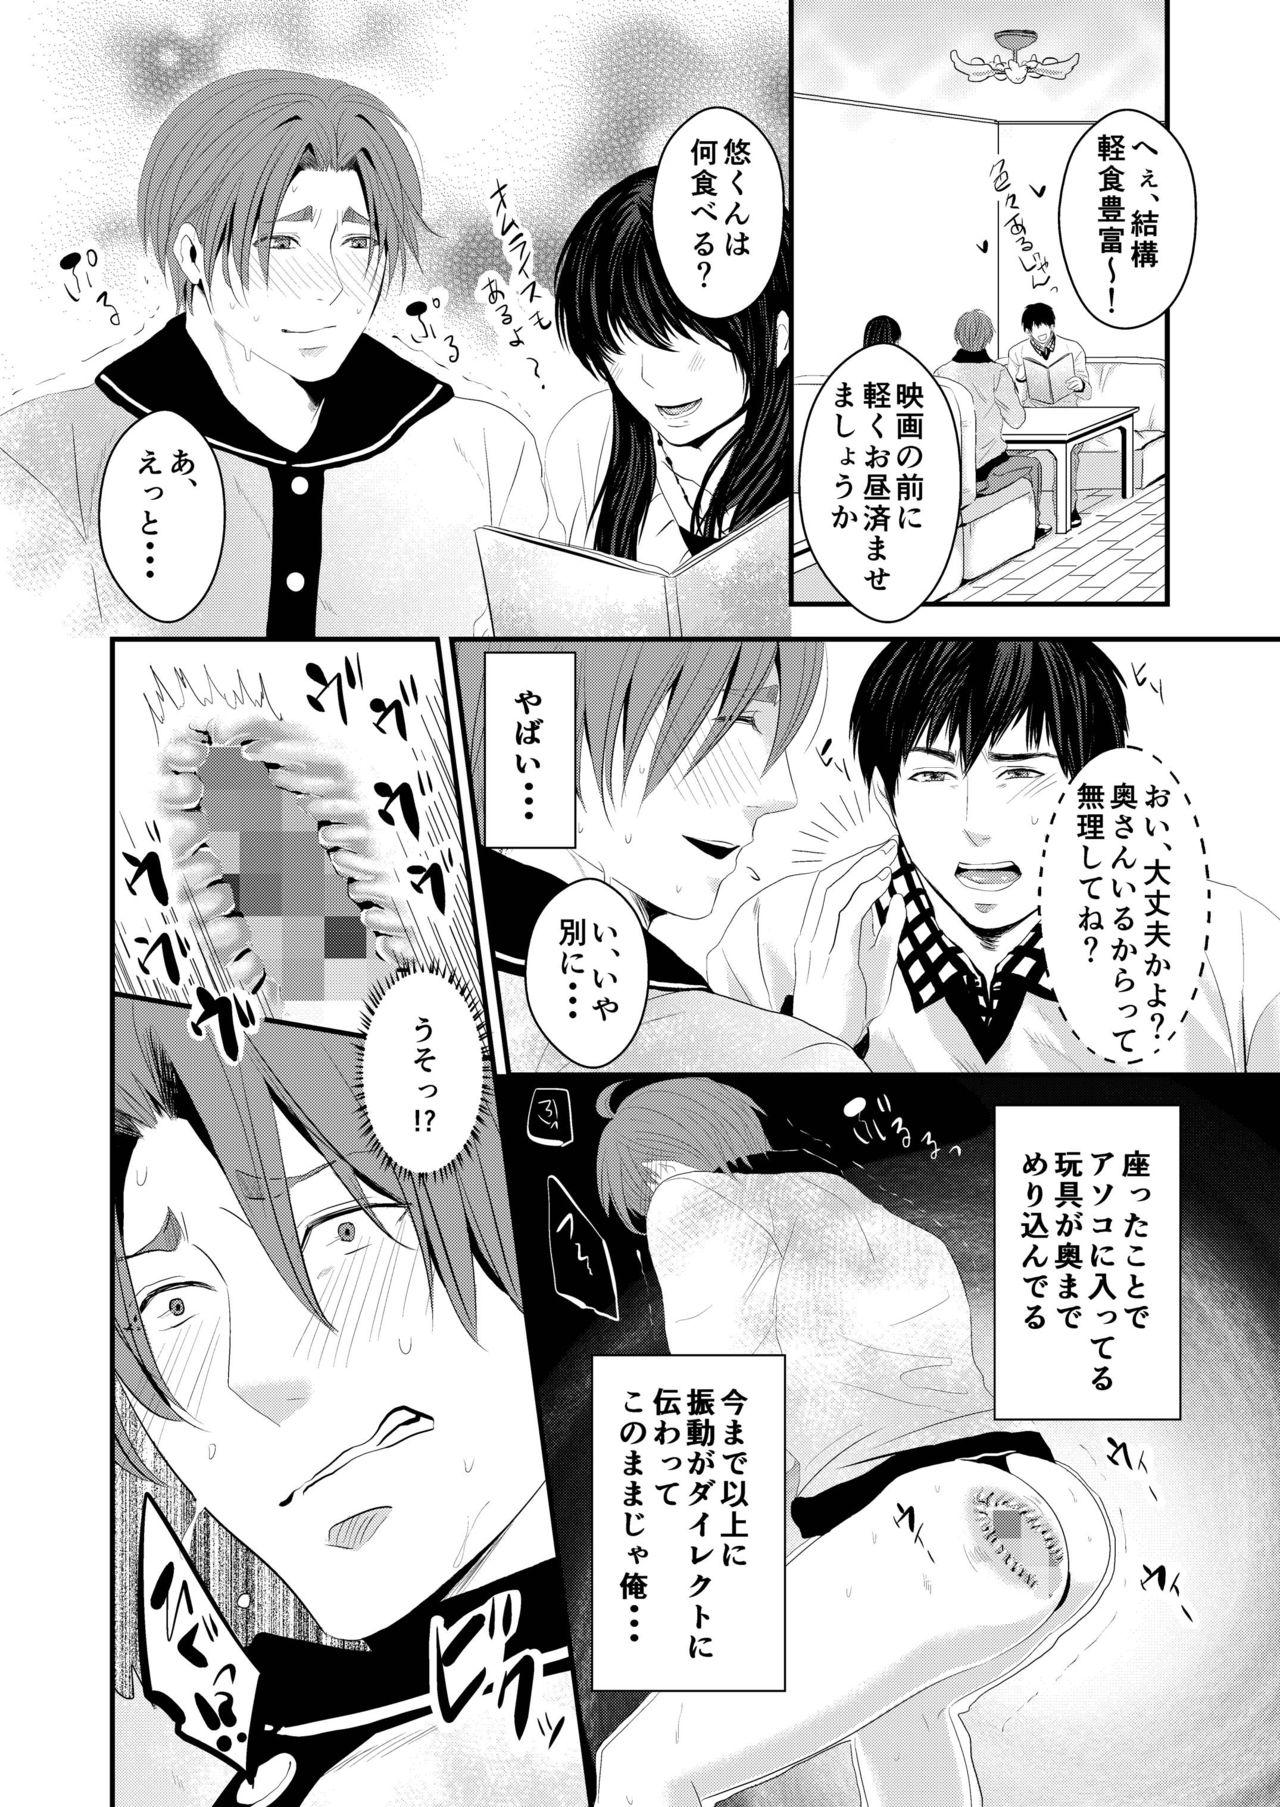 Bubblebutt Kono ai wa Yamai ni Nite iru 3 Transgender - Page 9